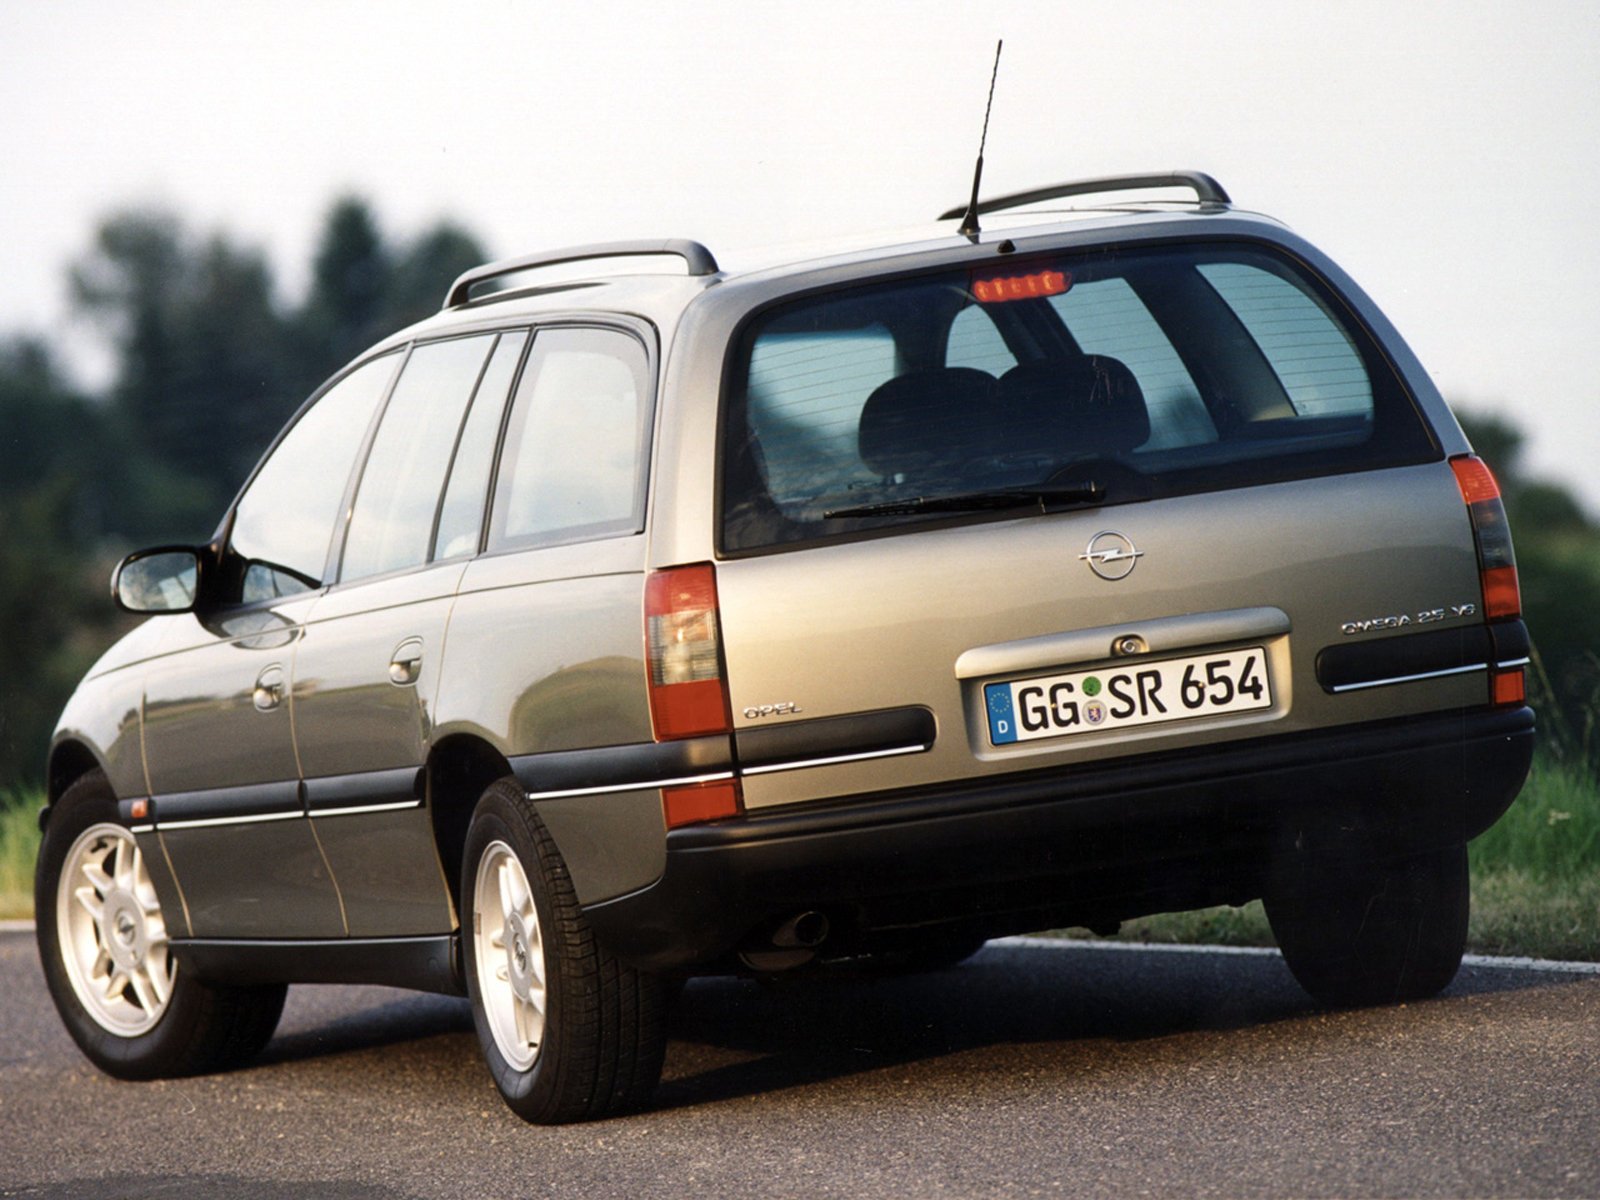 Универсал караван. Opel Omega 1997 универсал. Opel Omega Caravan универсал. Opel Omega a Caravan. Опель Омега b 1997 универсал.